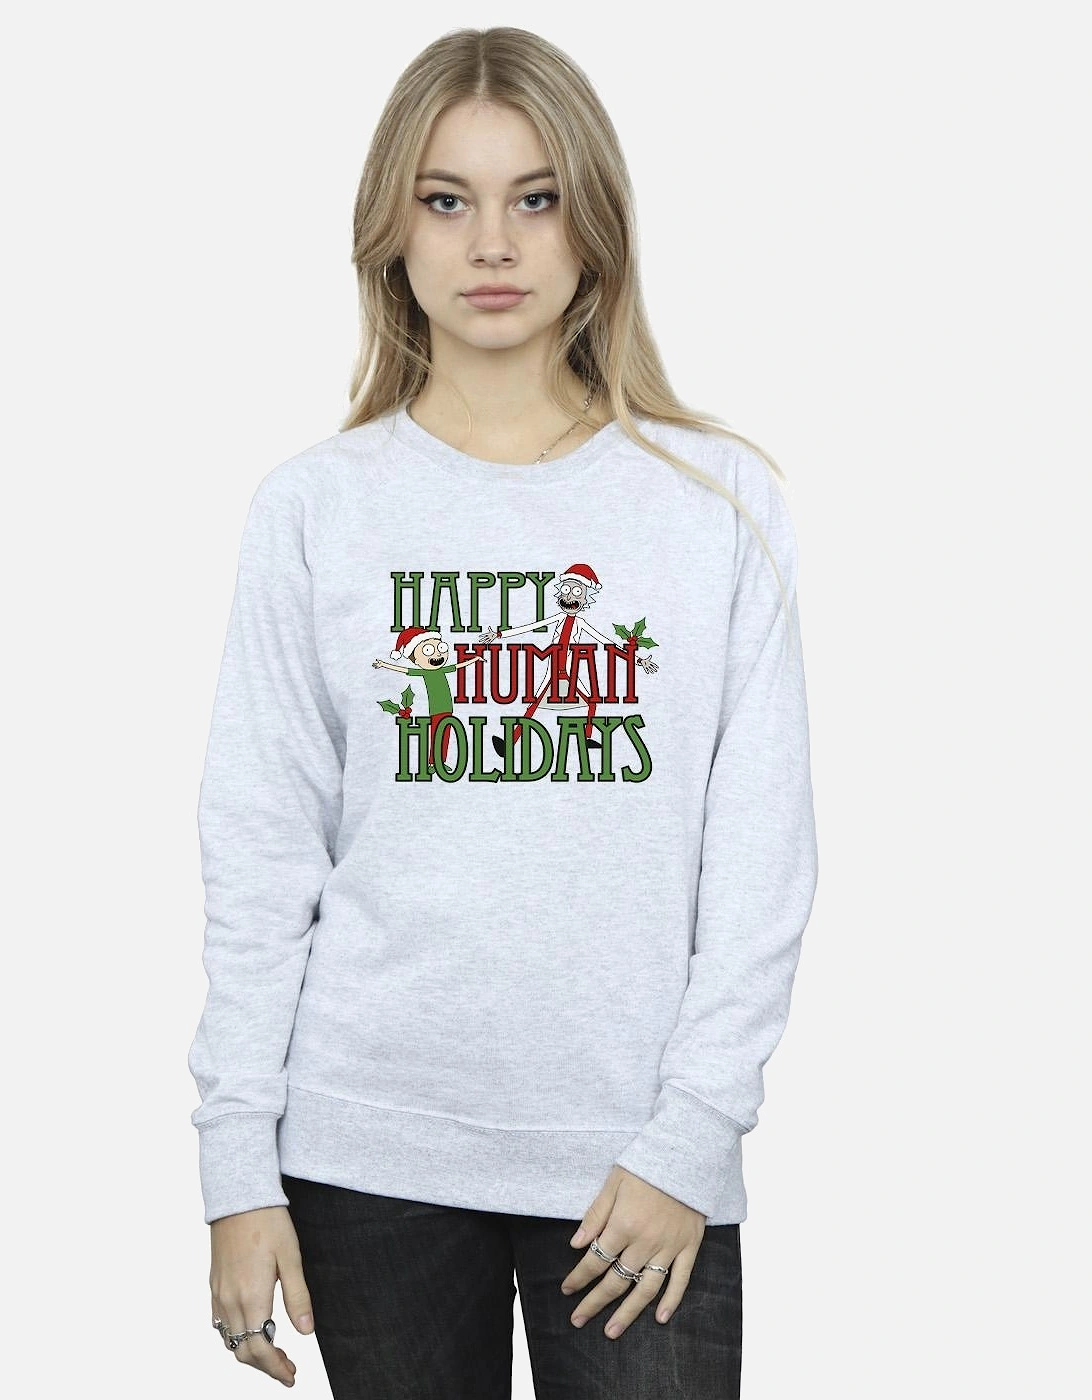 Womens/Ladies Happy Human Holidays Sweatshirt